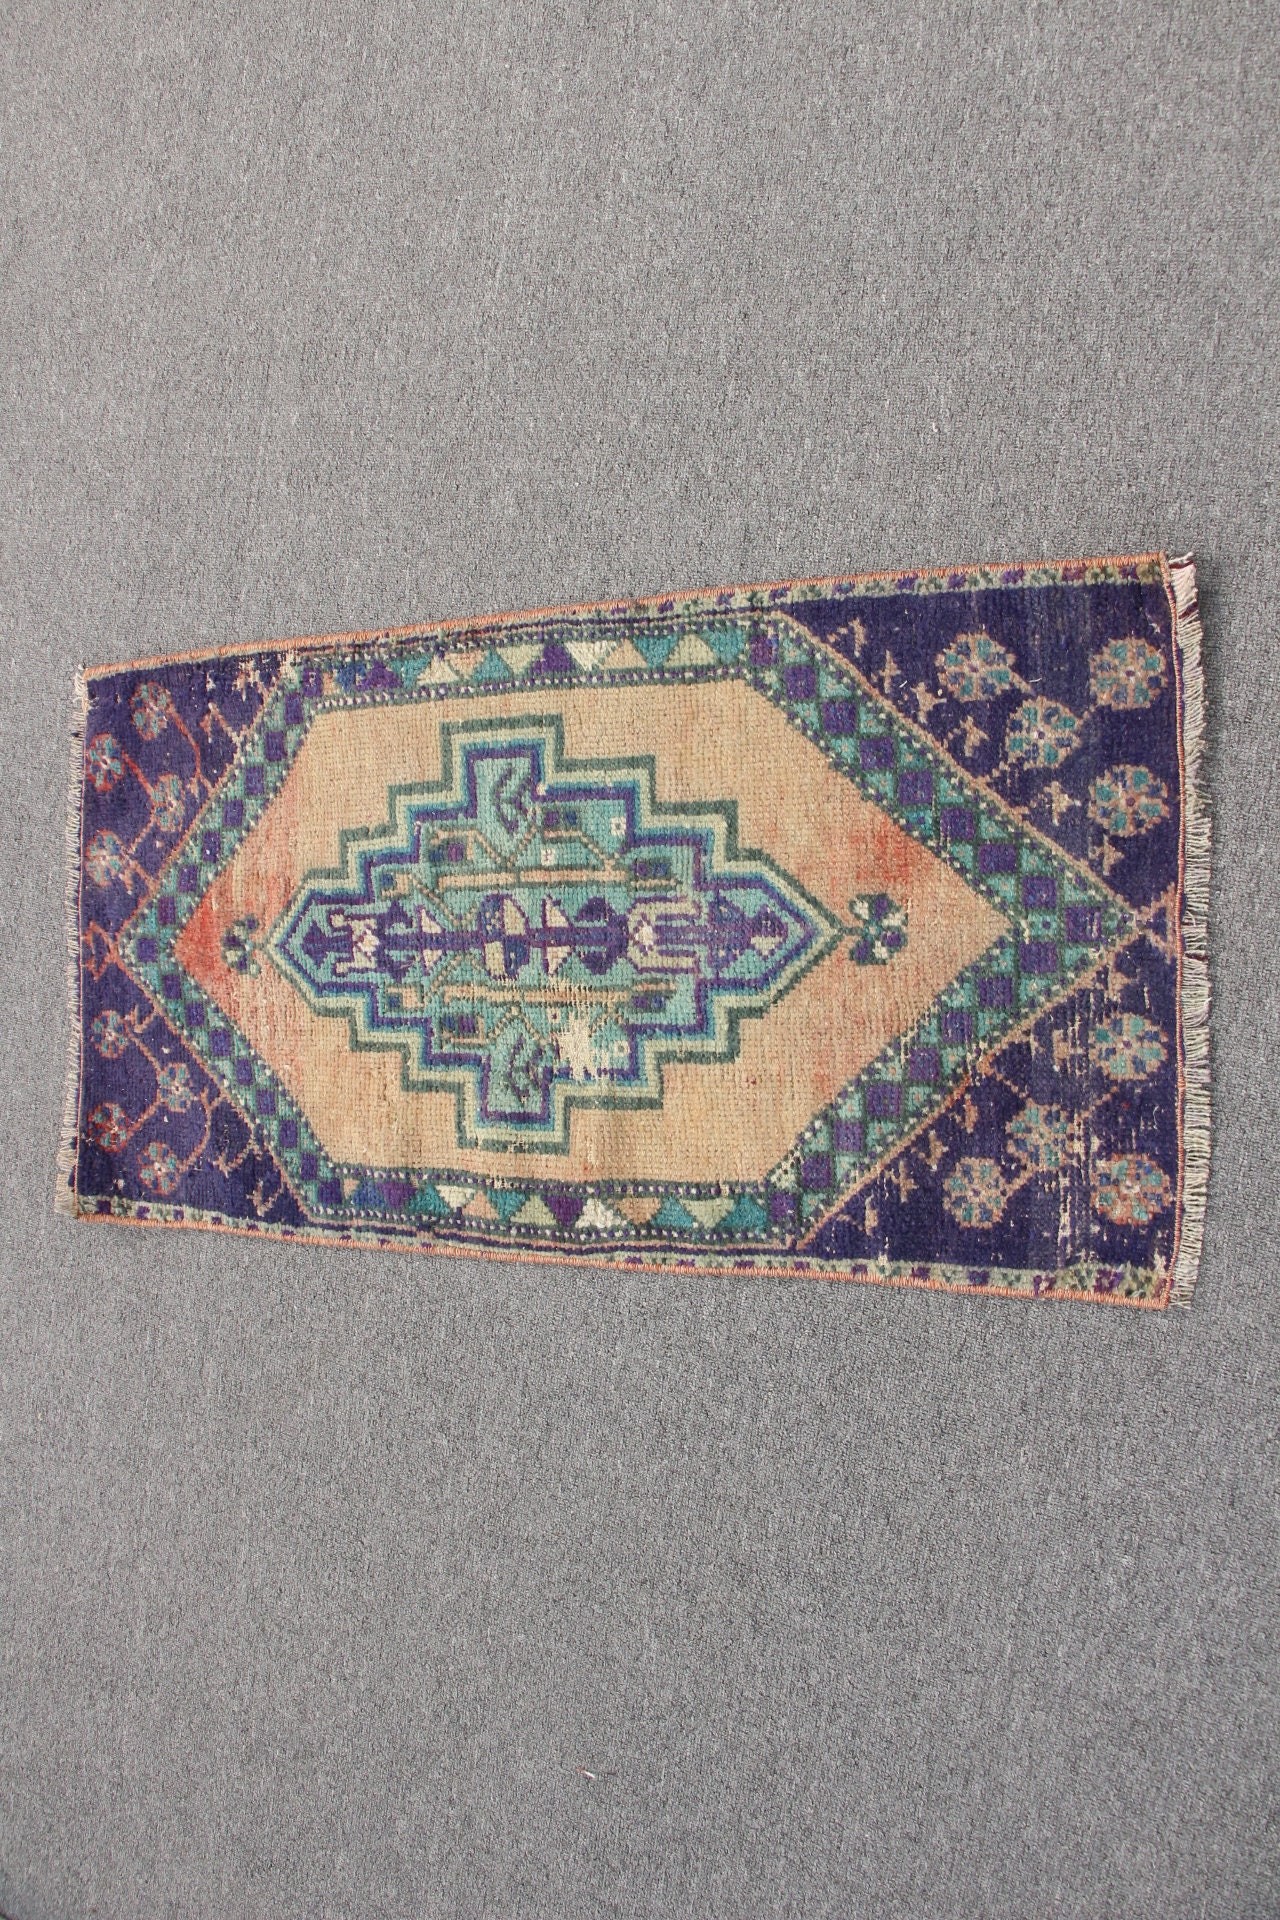 Moroccan Rugs, Kitchen Rug, Blue Moroccan Rugs, Vintage Rug, 1.6x3.1 ft Small Rug, Turkish Rugs, Abstract Rug, Nursery Rug, Anatolian Rugs